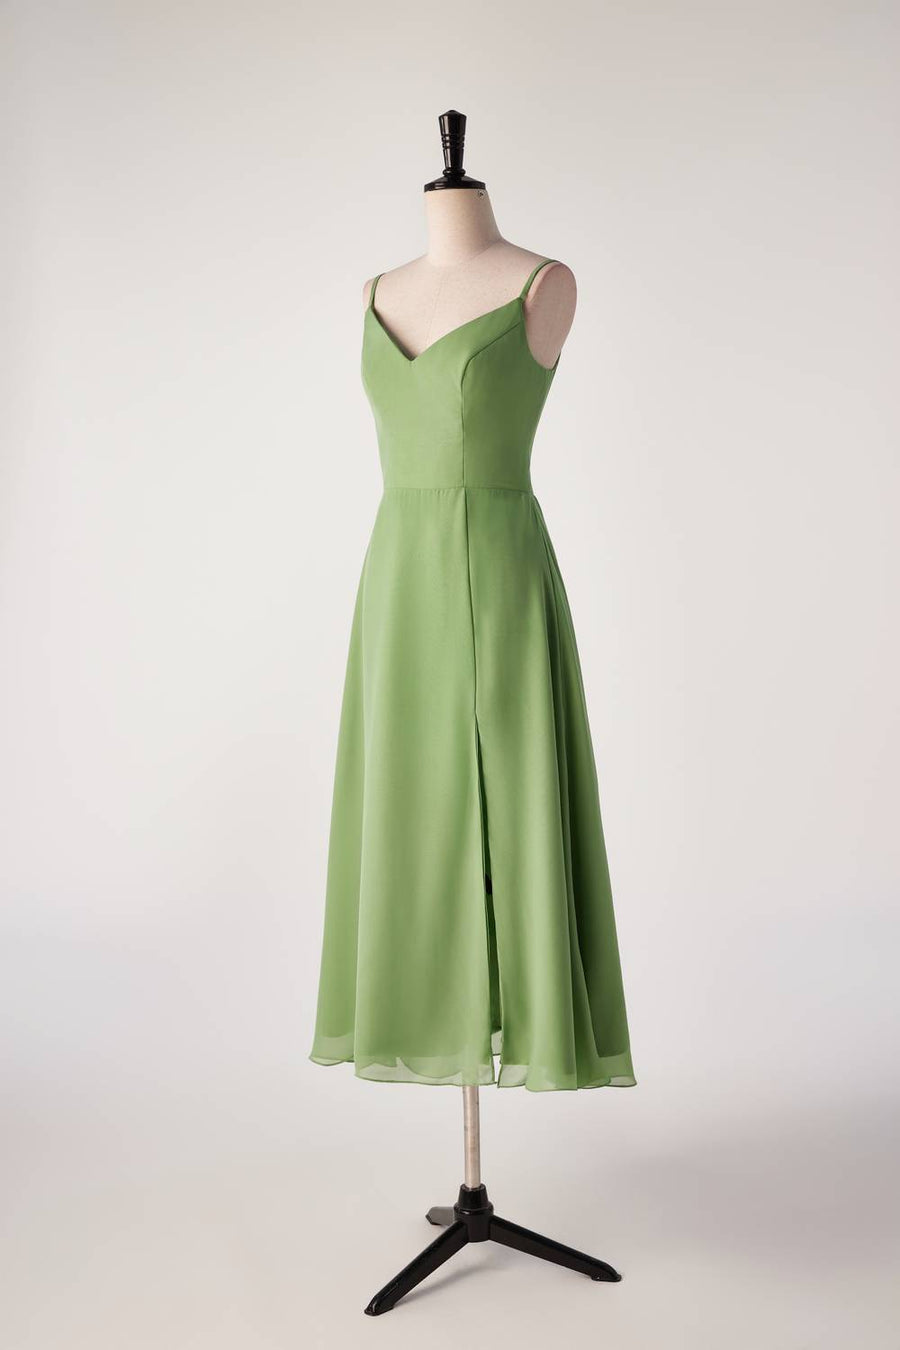 Matcha Green Straps Tea Length Bridesmaid Dress